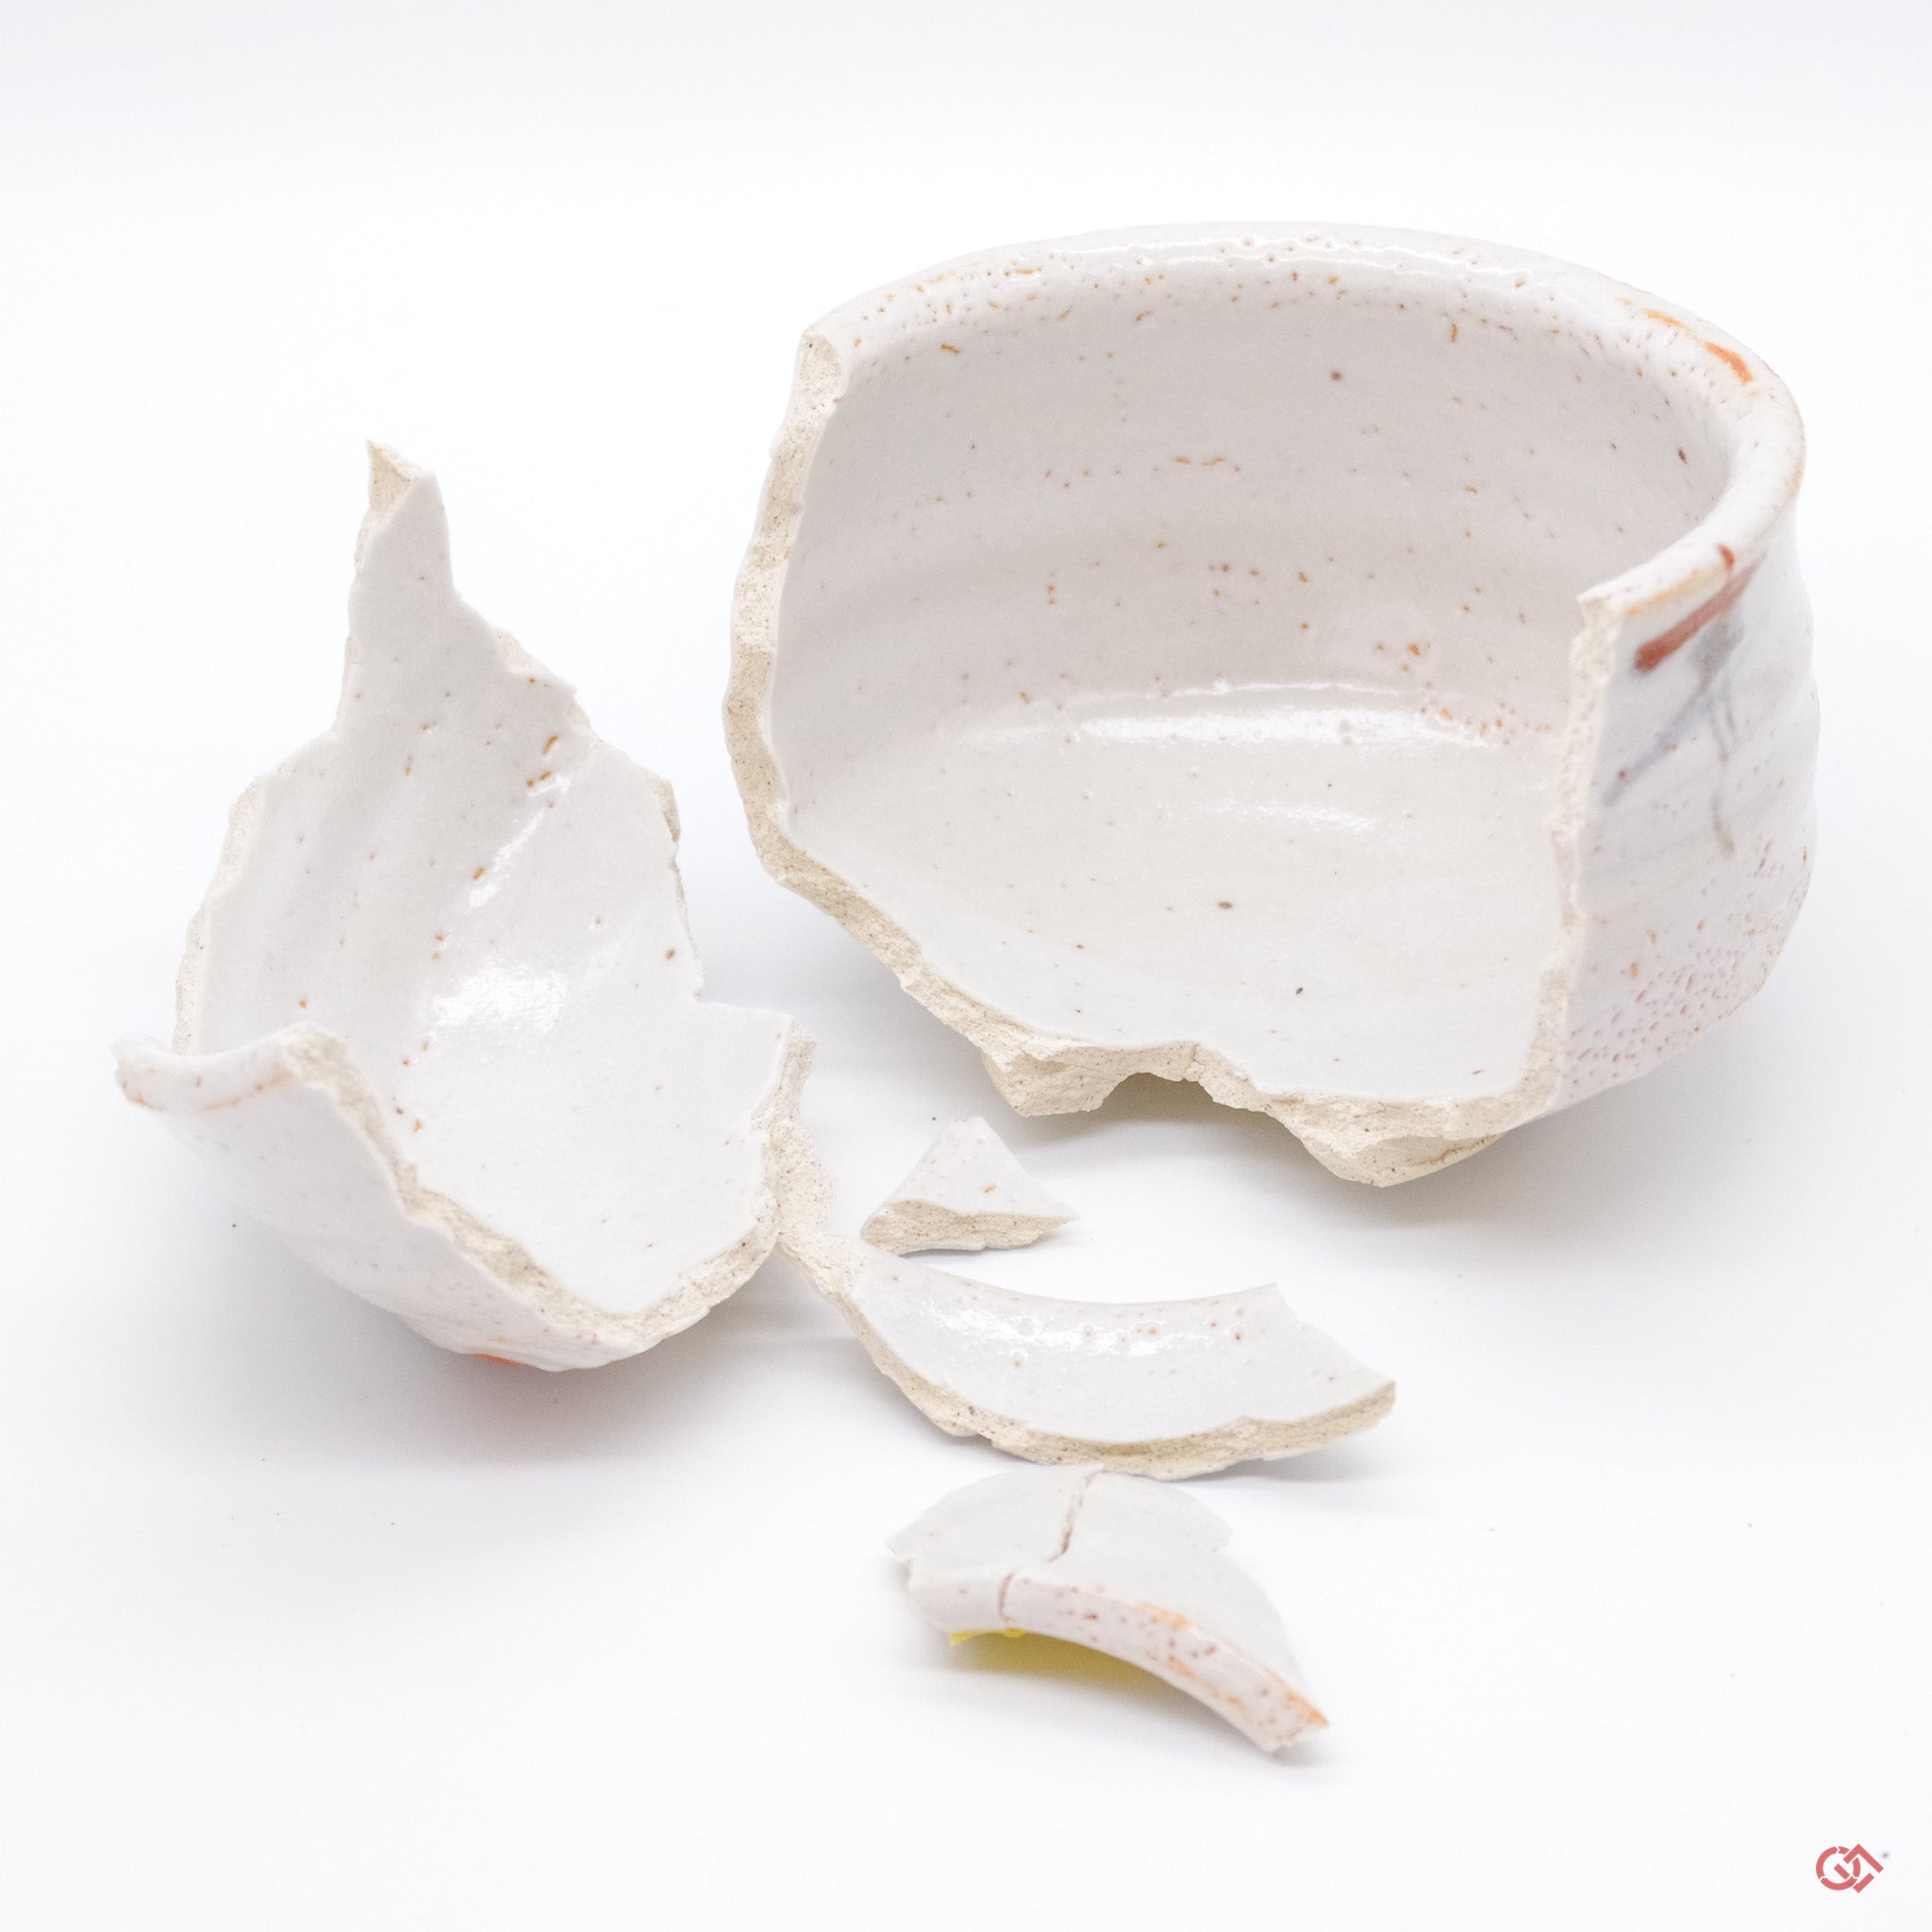 Japanese broken pottery